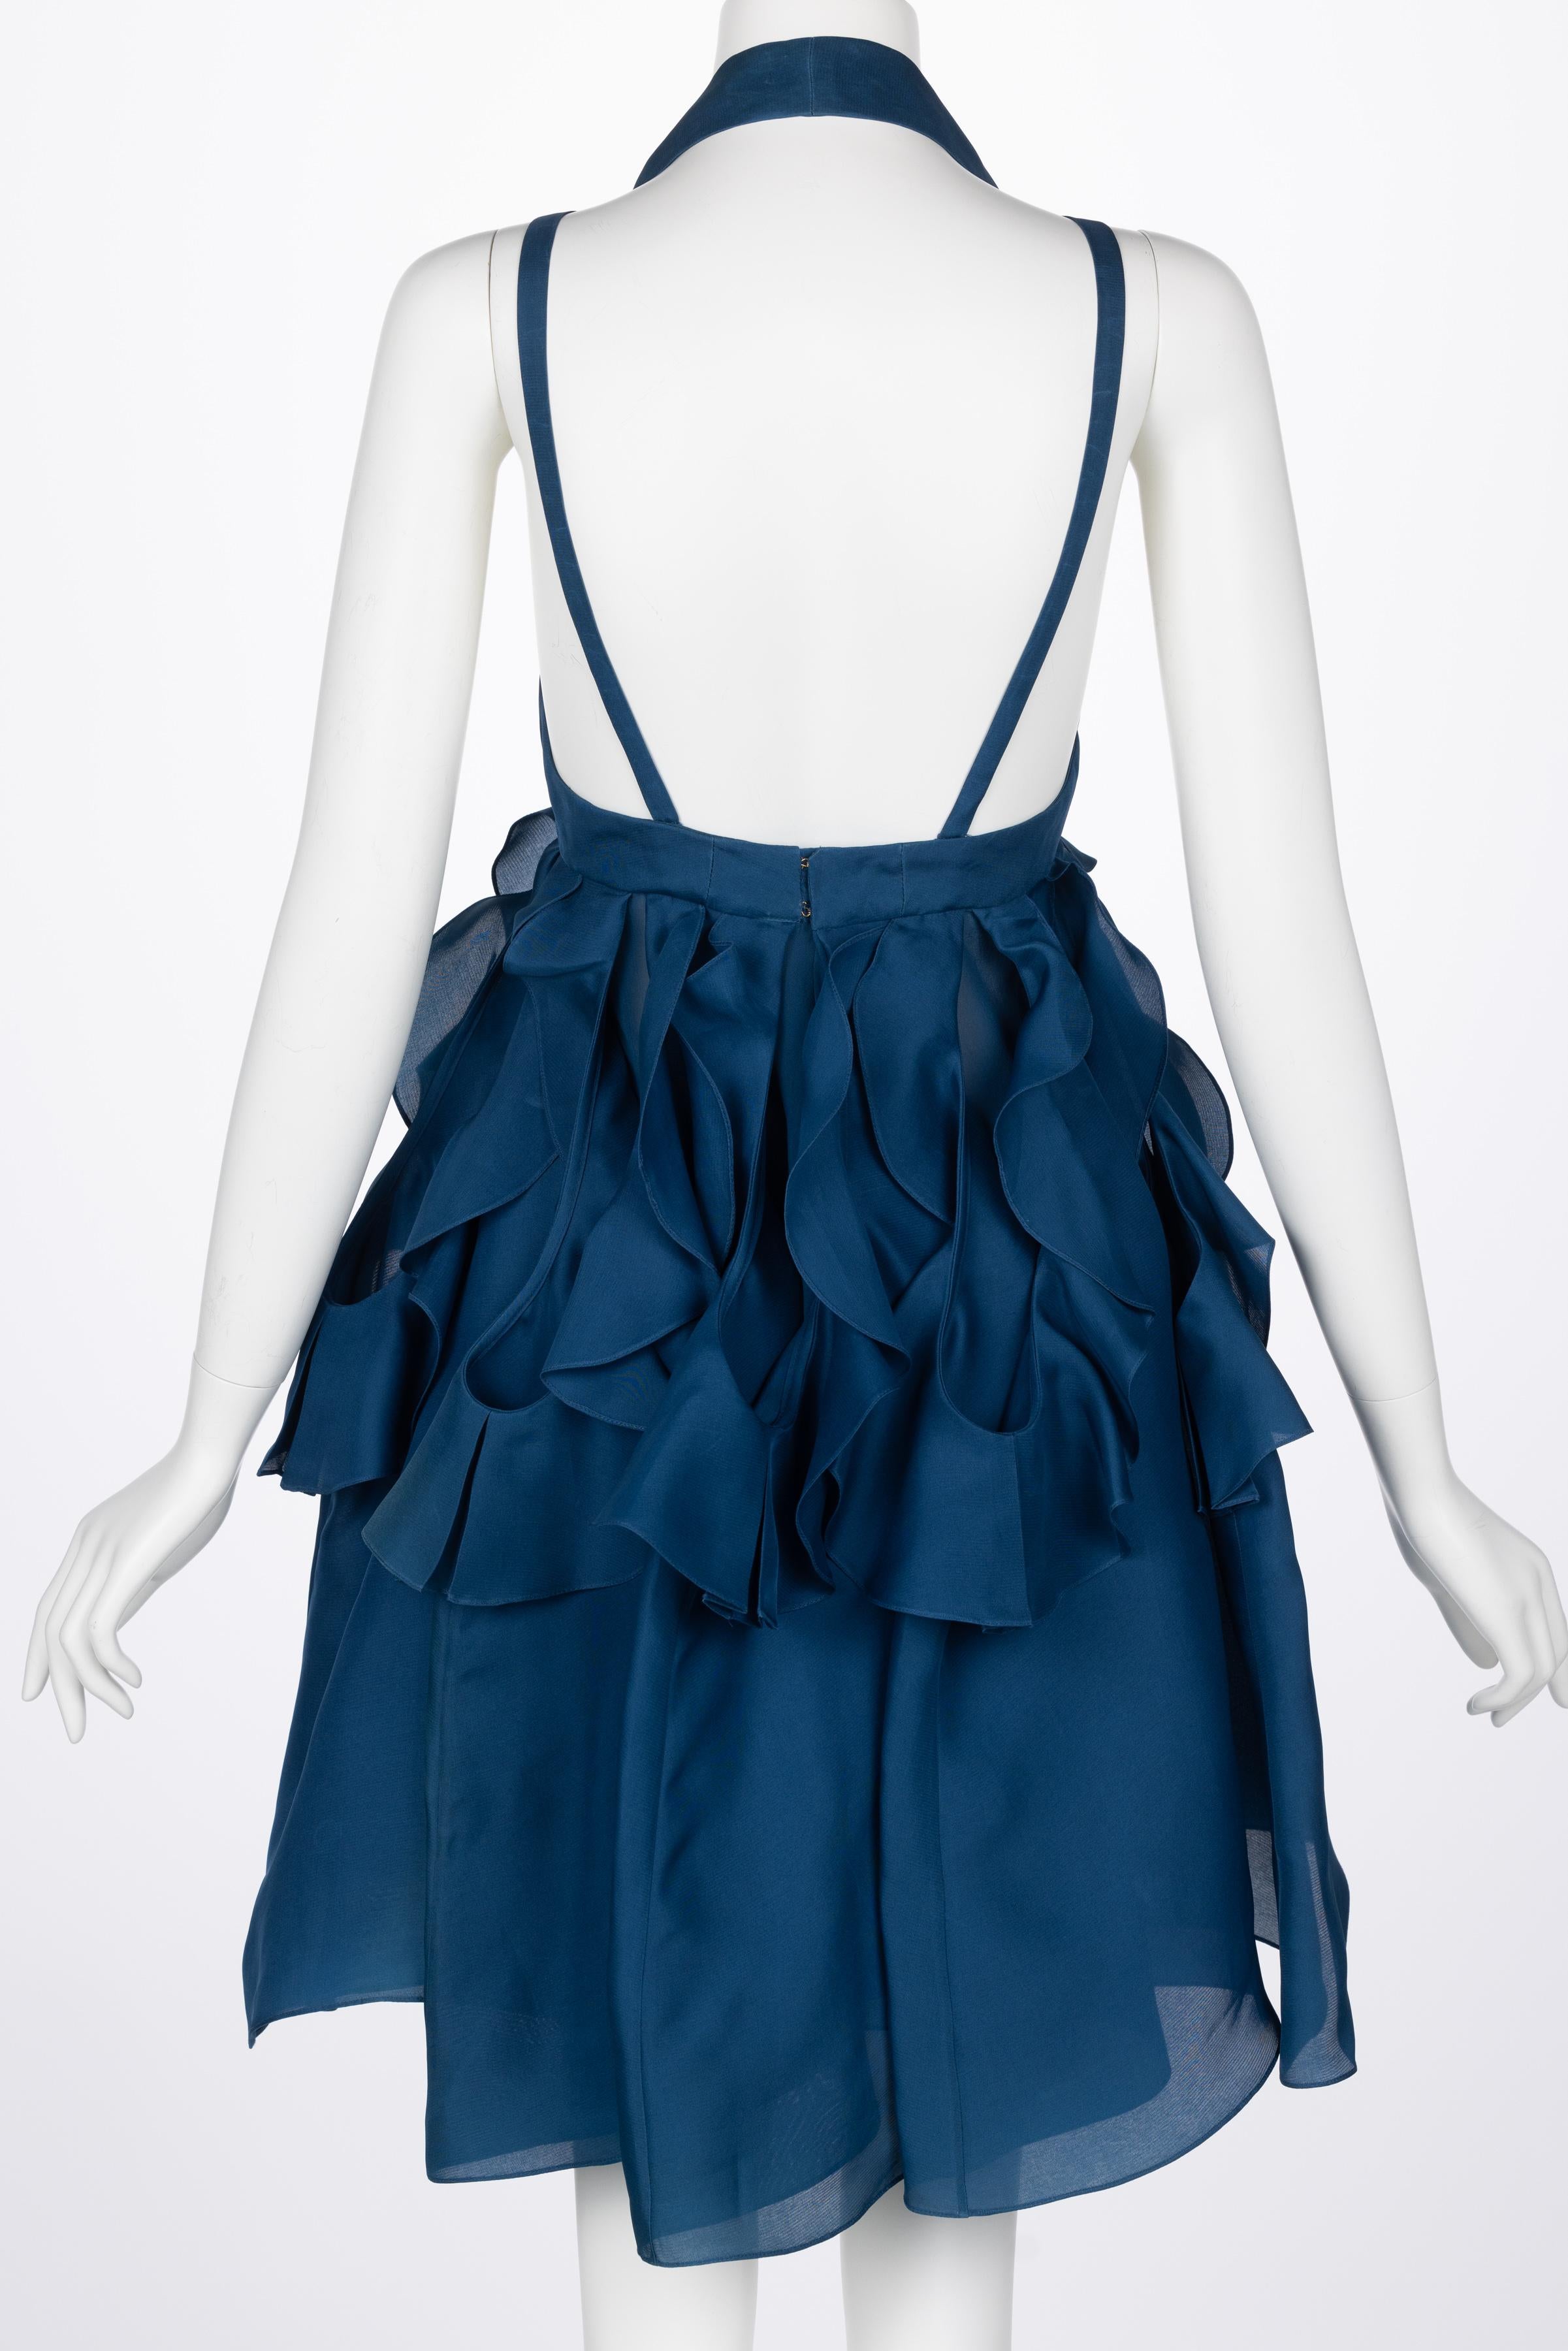 Yves Saint Laurent Blue Silk Organza Spring 2012 Runway Dress For Sale 2